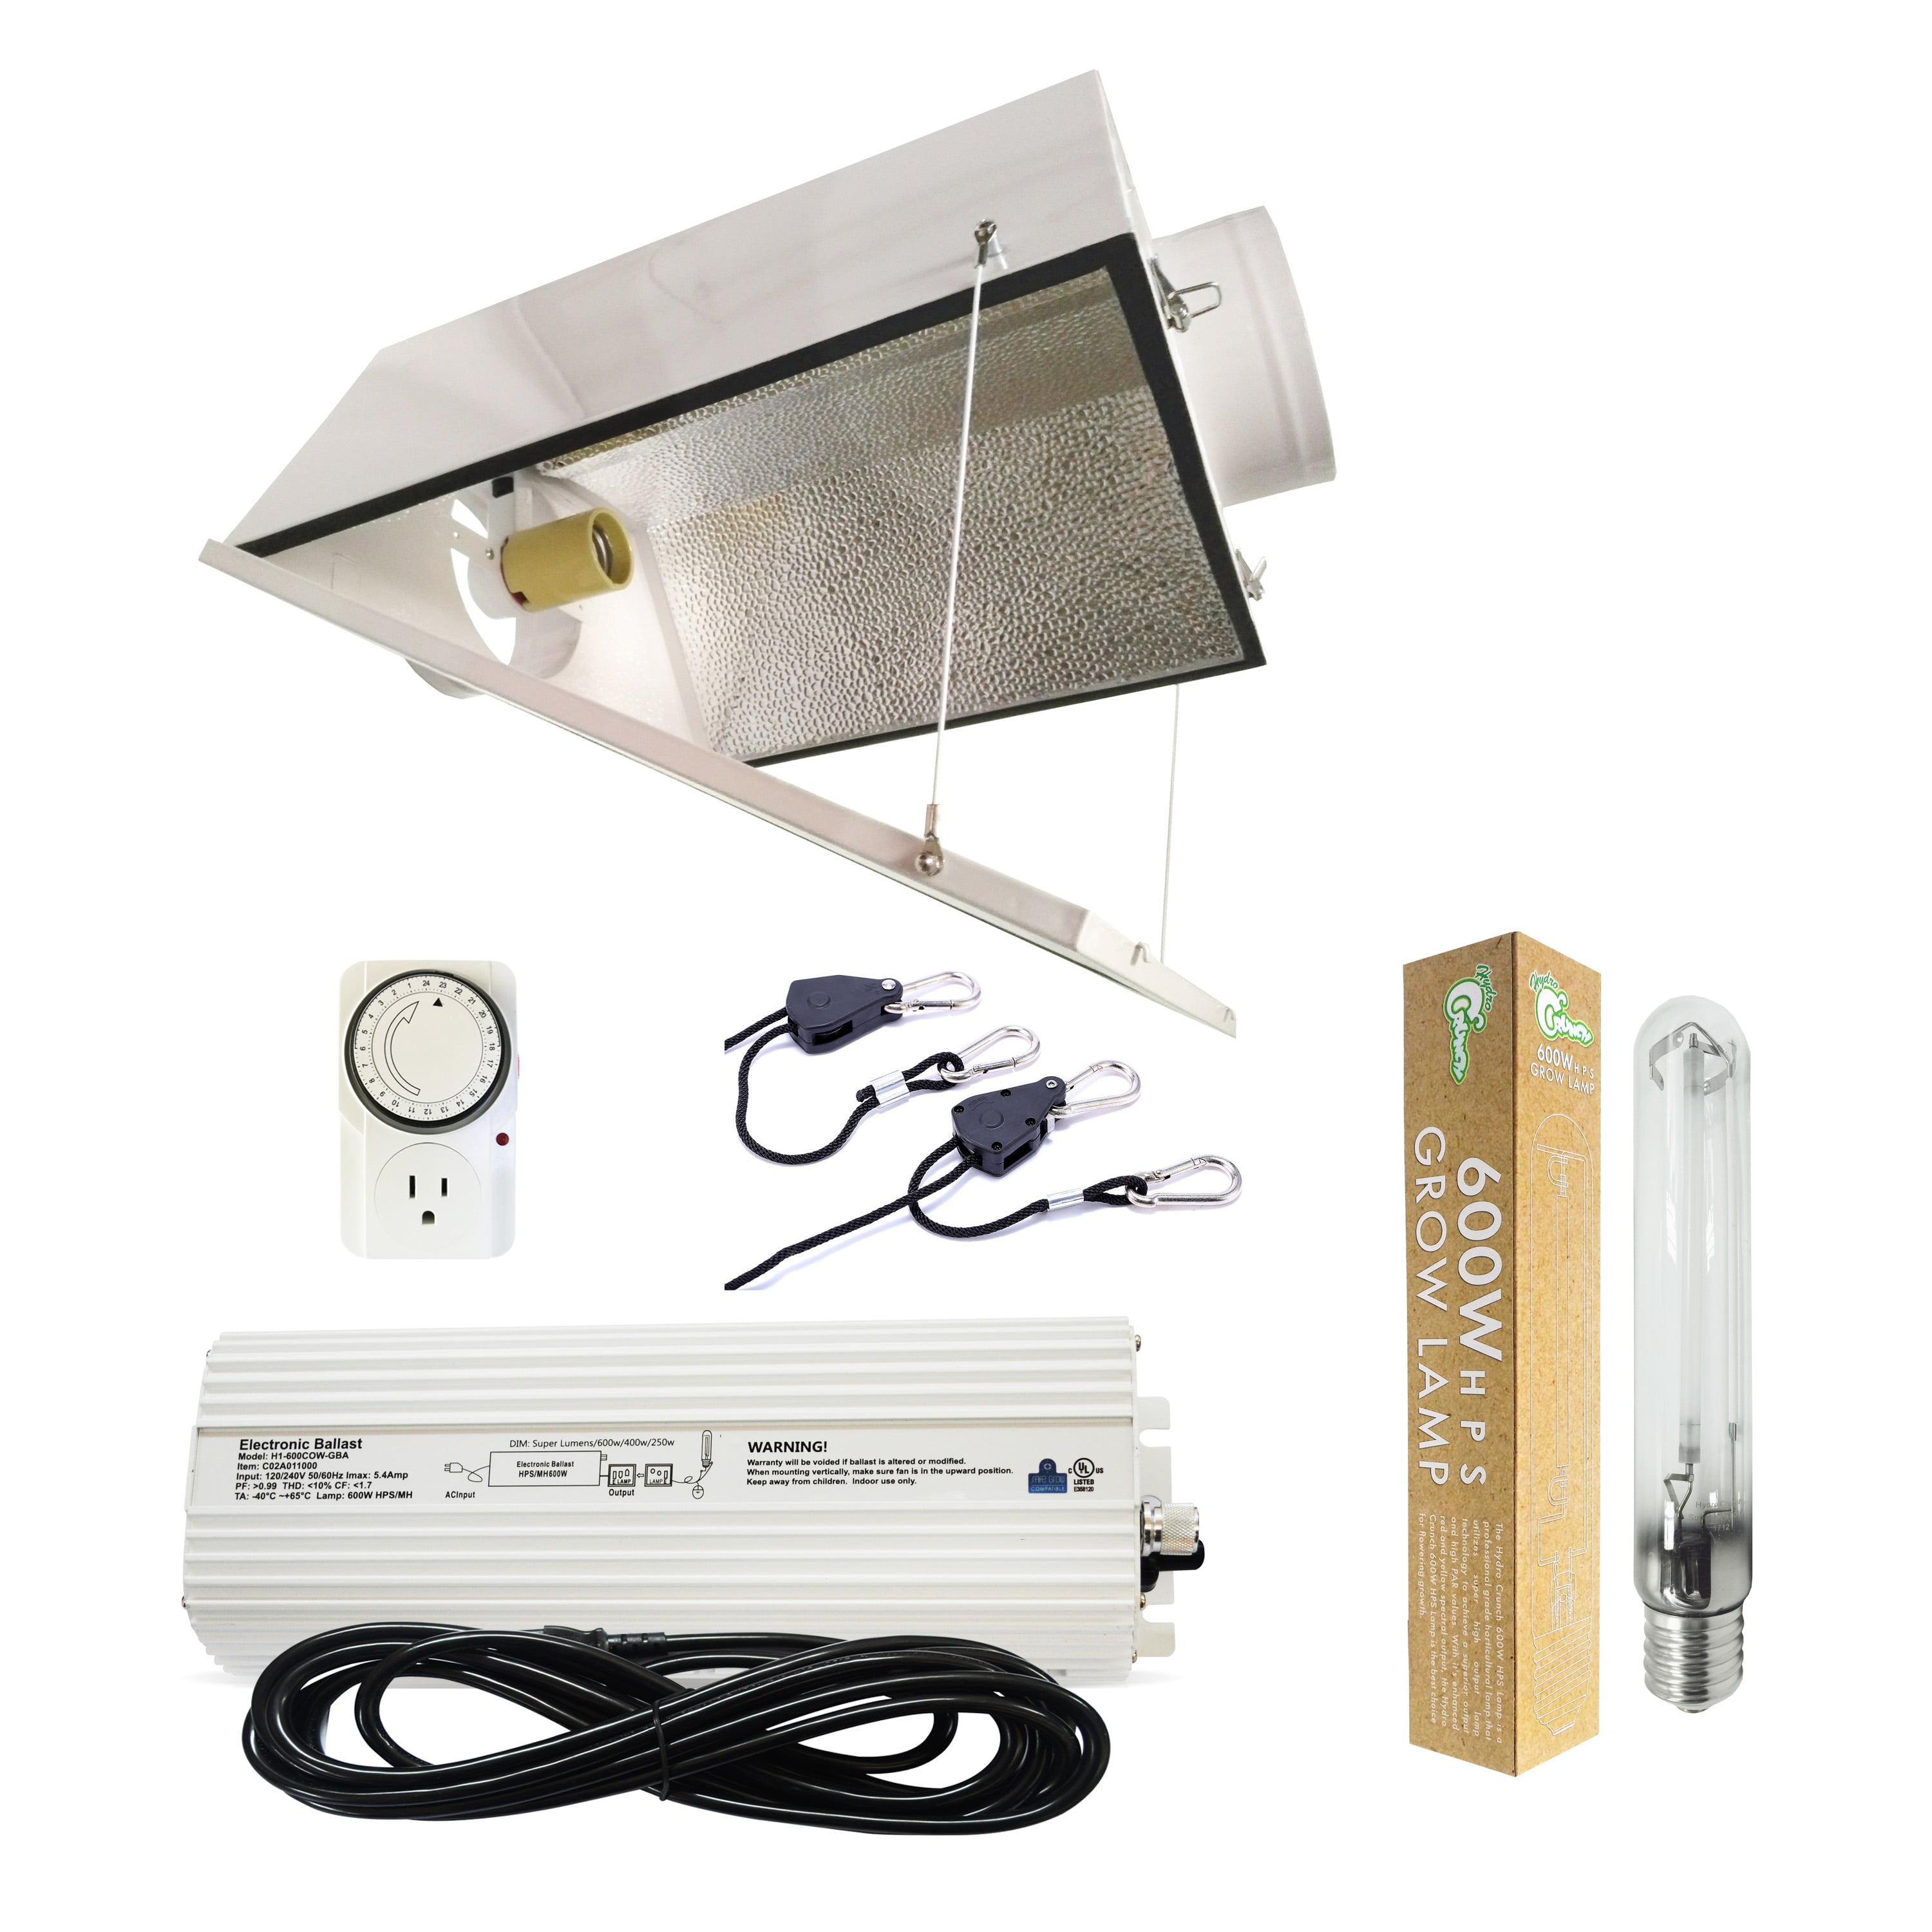 Reflector Hood 600w Dimmable Digital Ballast Grow Light Kit HPS Dual Lamp 